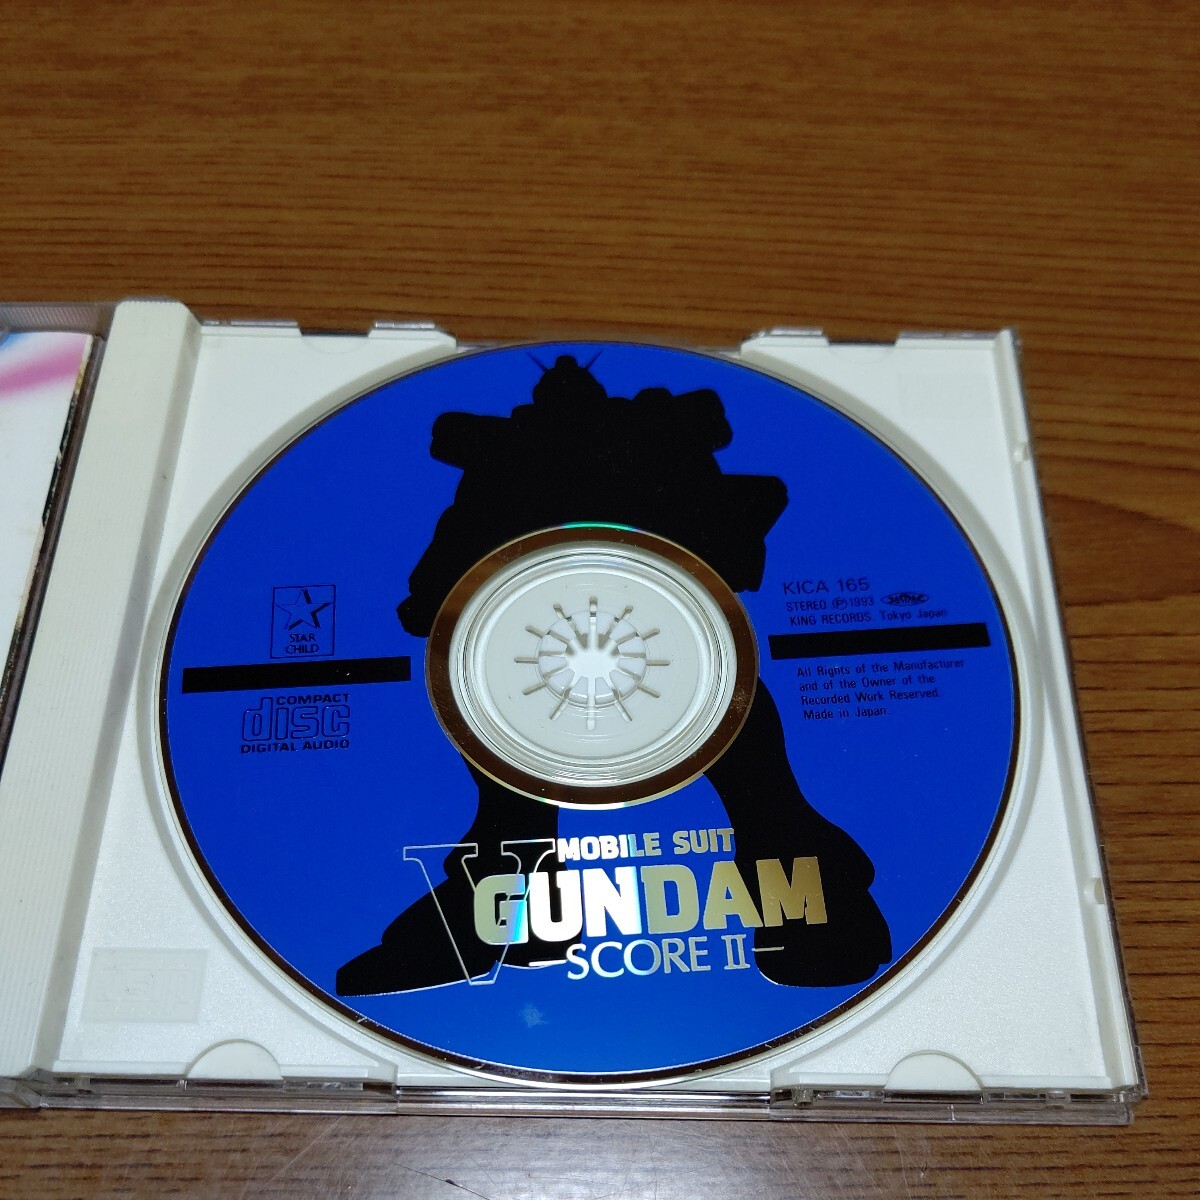  б/у CD Mobile Suit V Gundam оригинал саундтрек SCOREII